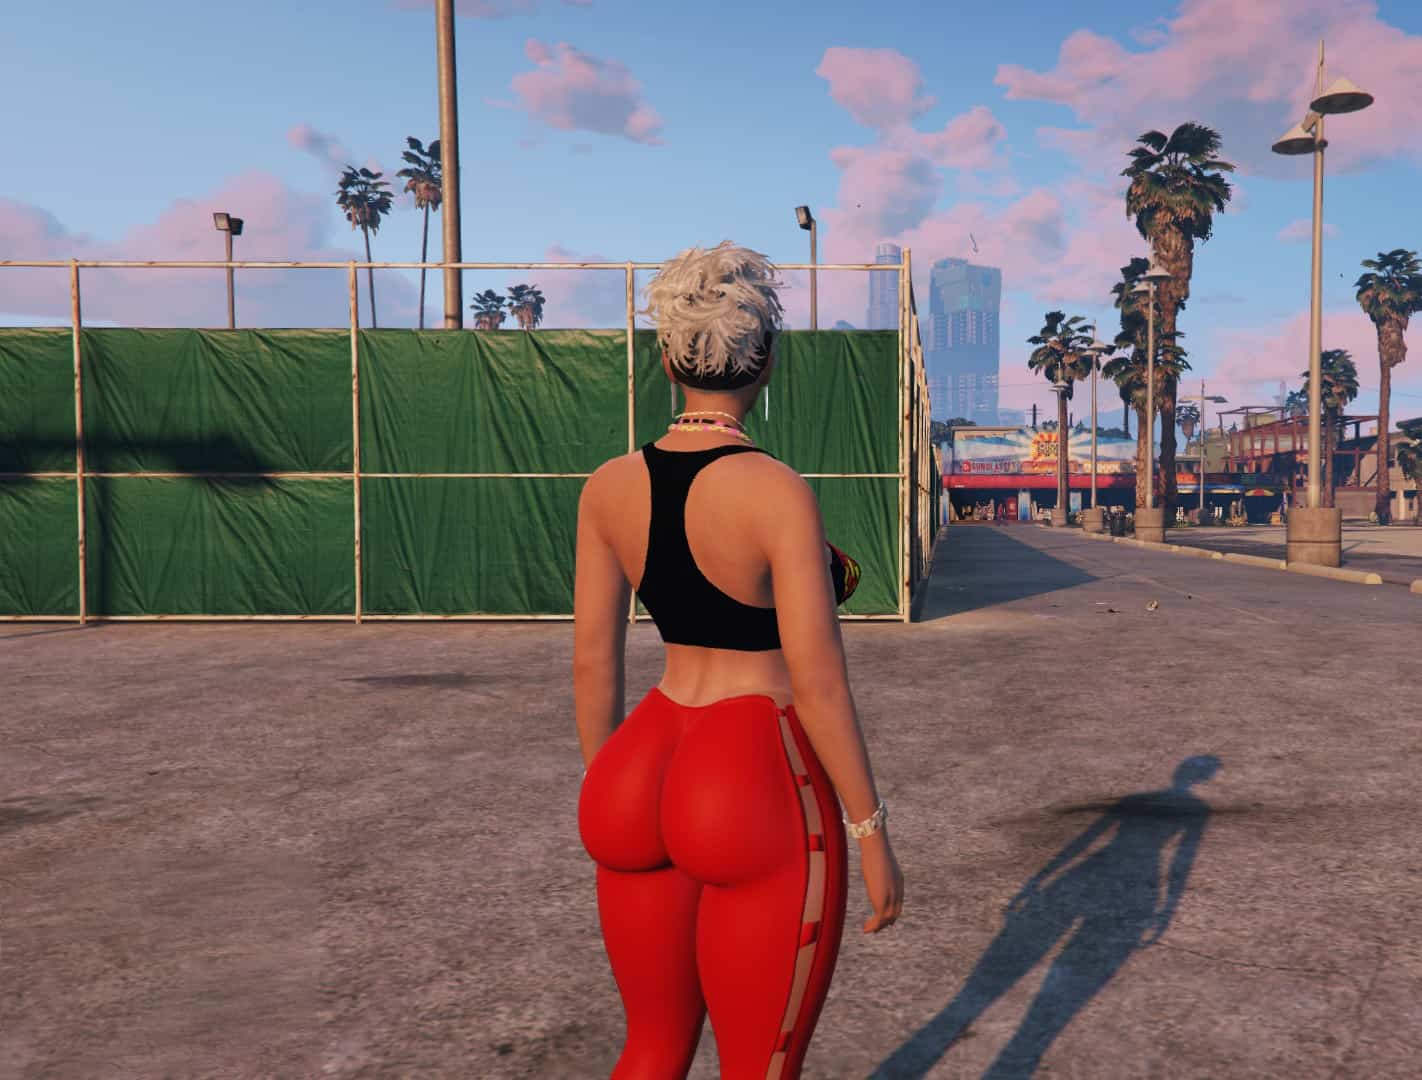 Mp Female New Full Body 1 0 Gta 5 Mod Grand Theft Auto 5 Mod Free